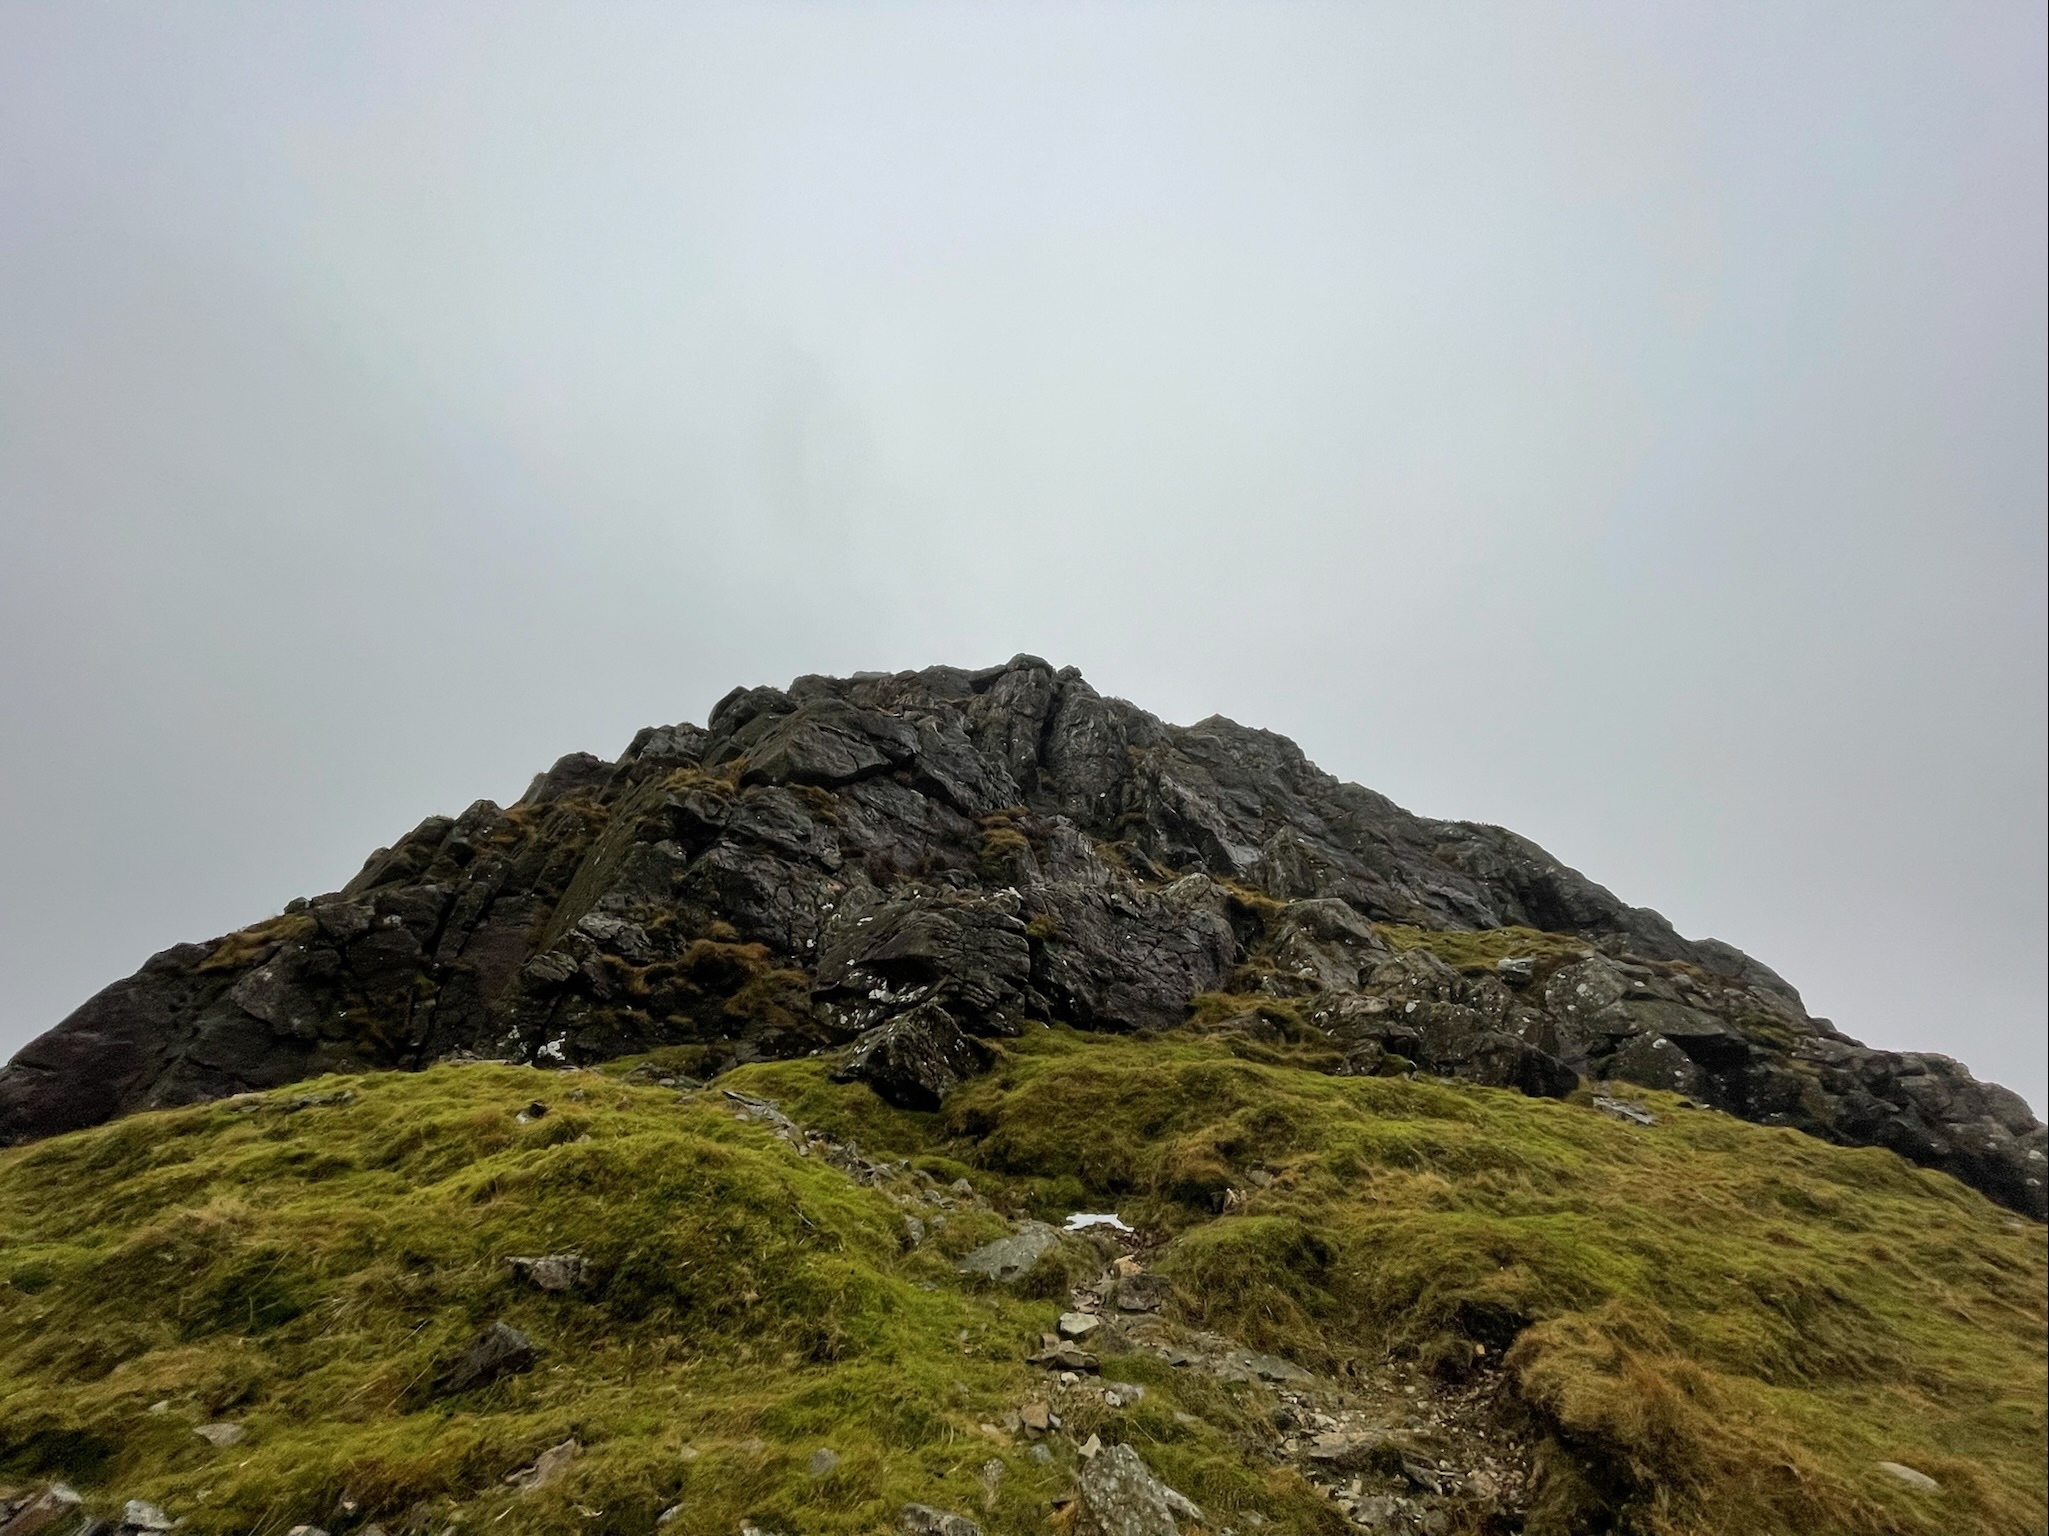 Stirrup Crag from below